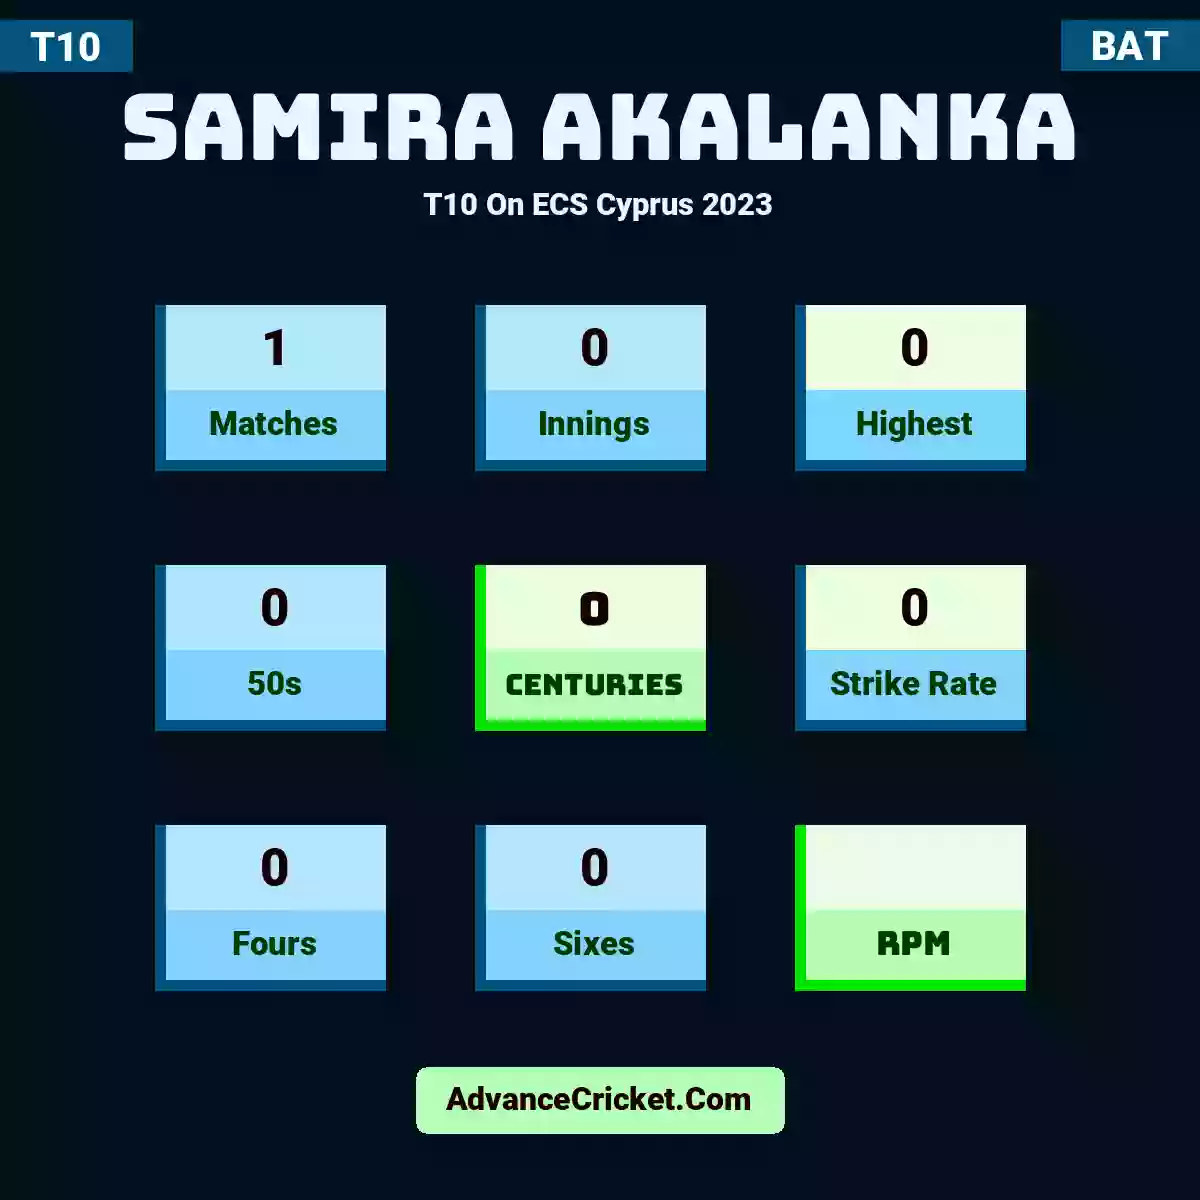 Samira Akalanka T10  On ECS Cyprus 2023, Samira Akalanka played 1 matches, scored 0 runs as highest, 0 half-centuries, and 0 centuries, with a strike rate of 0. S.Akalanka hit 0 fours and 0 sixes.